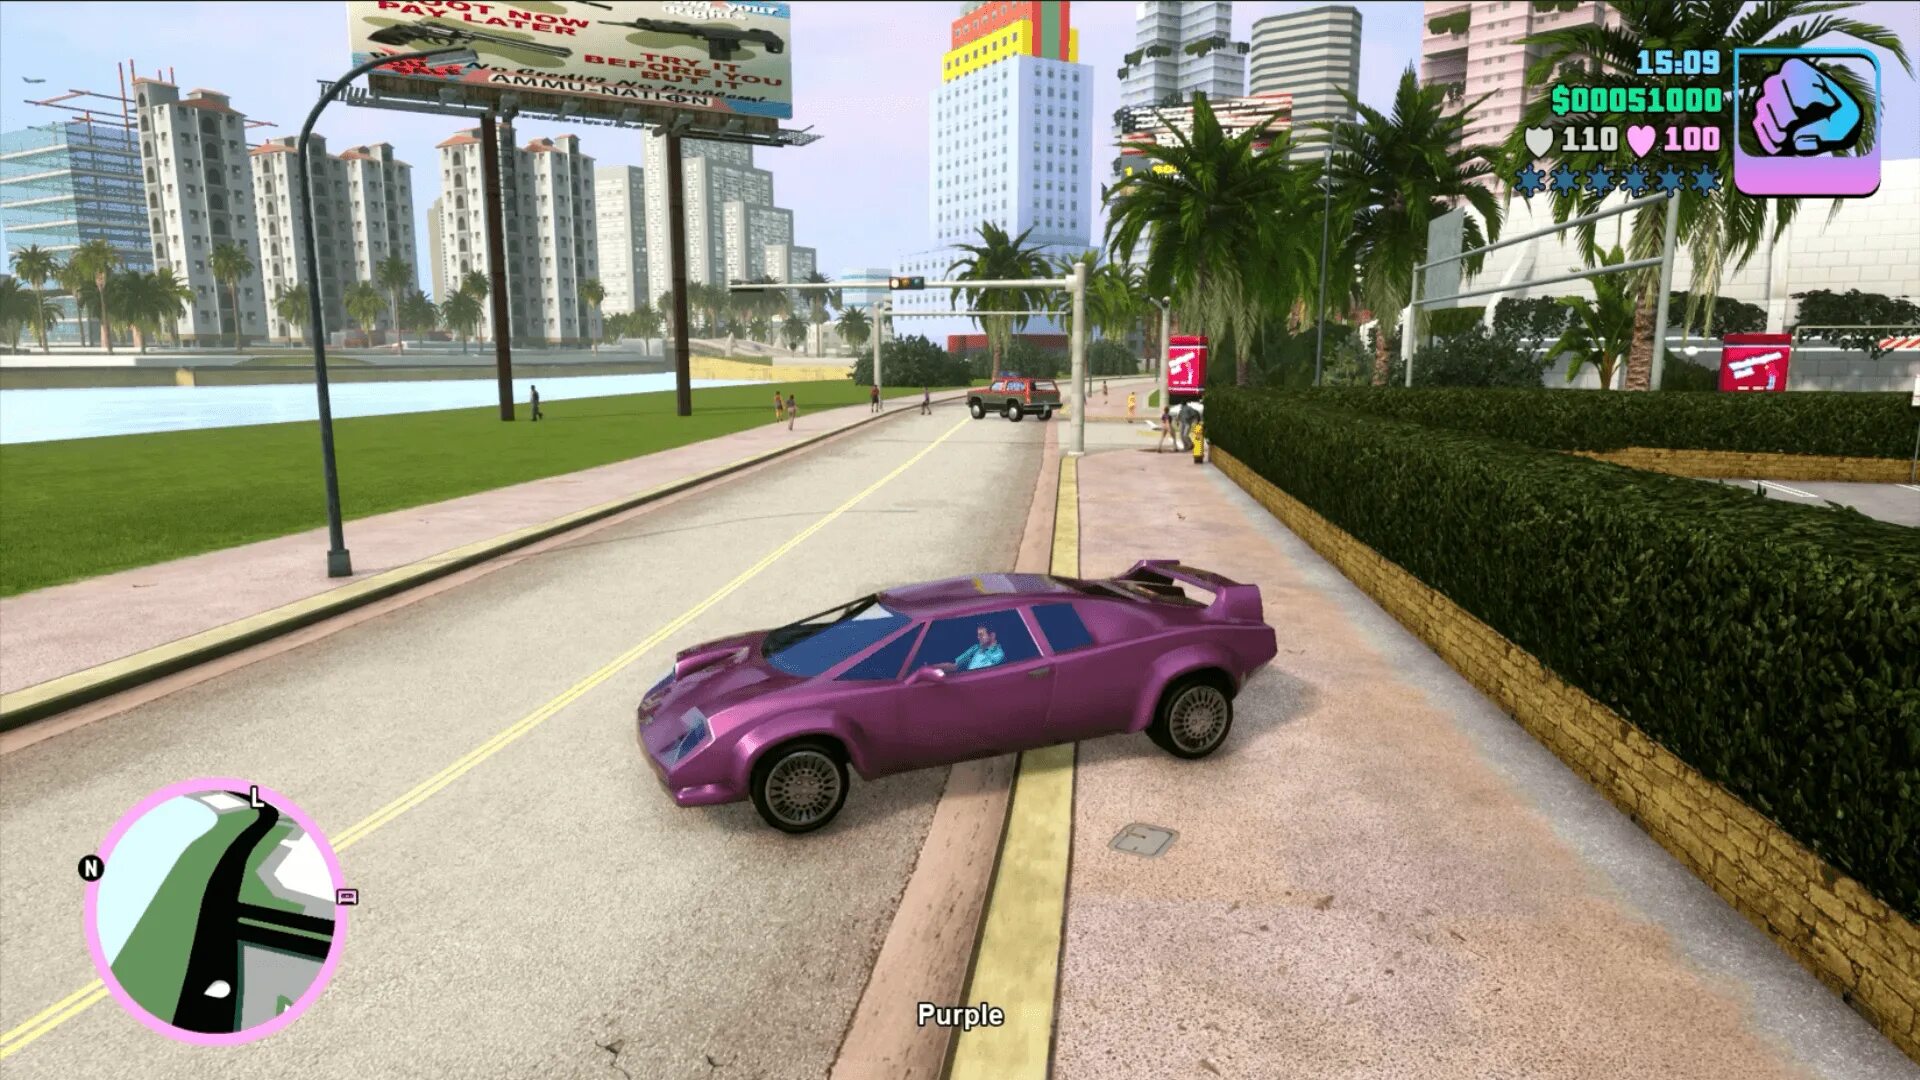 Моды на гта вайс сити. Grand Theft auto vice City Definitive Edition. ГТА Вайс Сити Дефинитив эдиш. ГТА Вайс Сити Definitive Edition. GTA Definitive Edition vice City 2019.